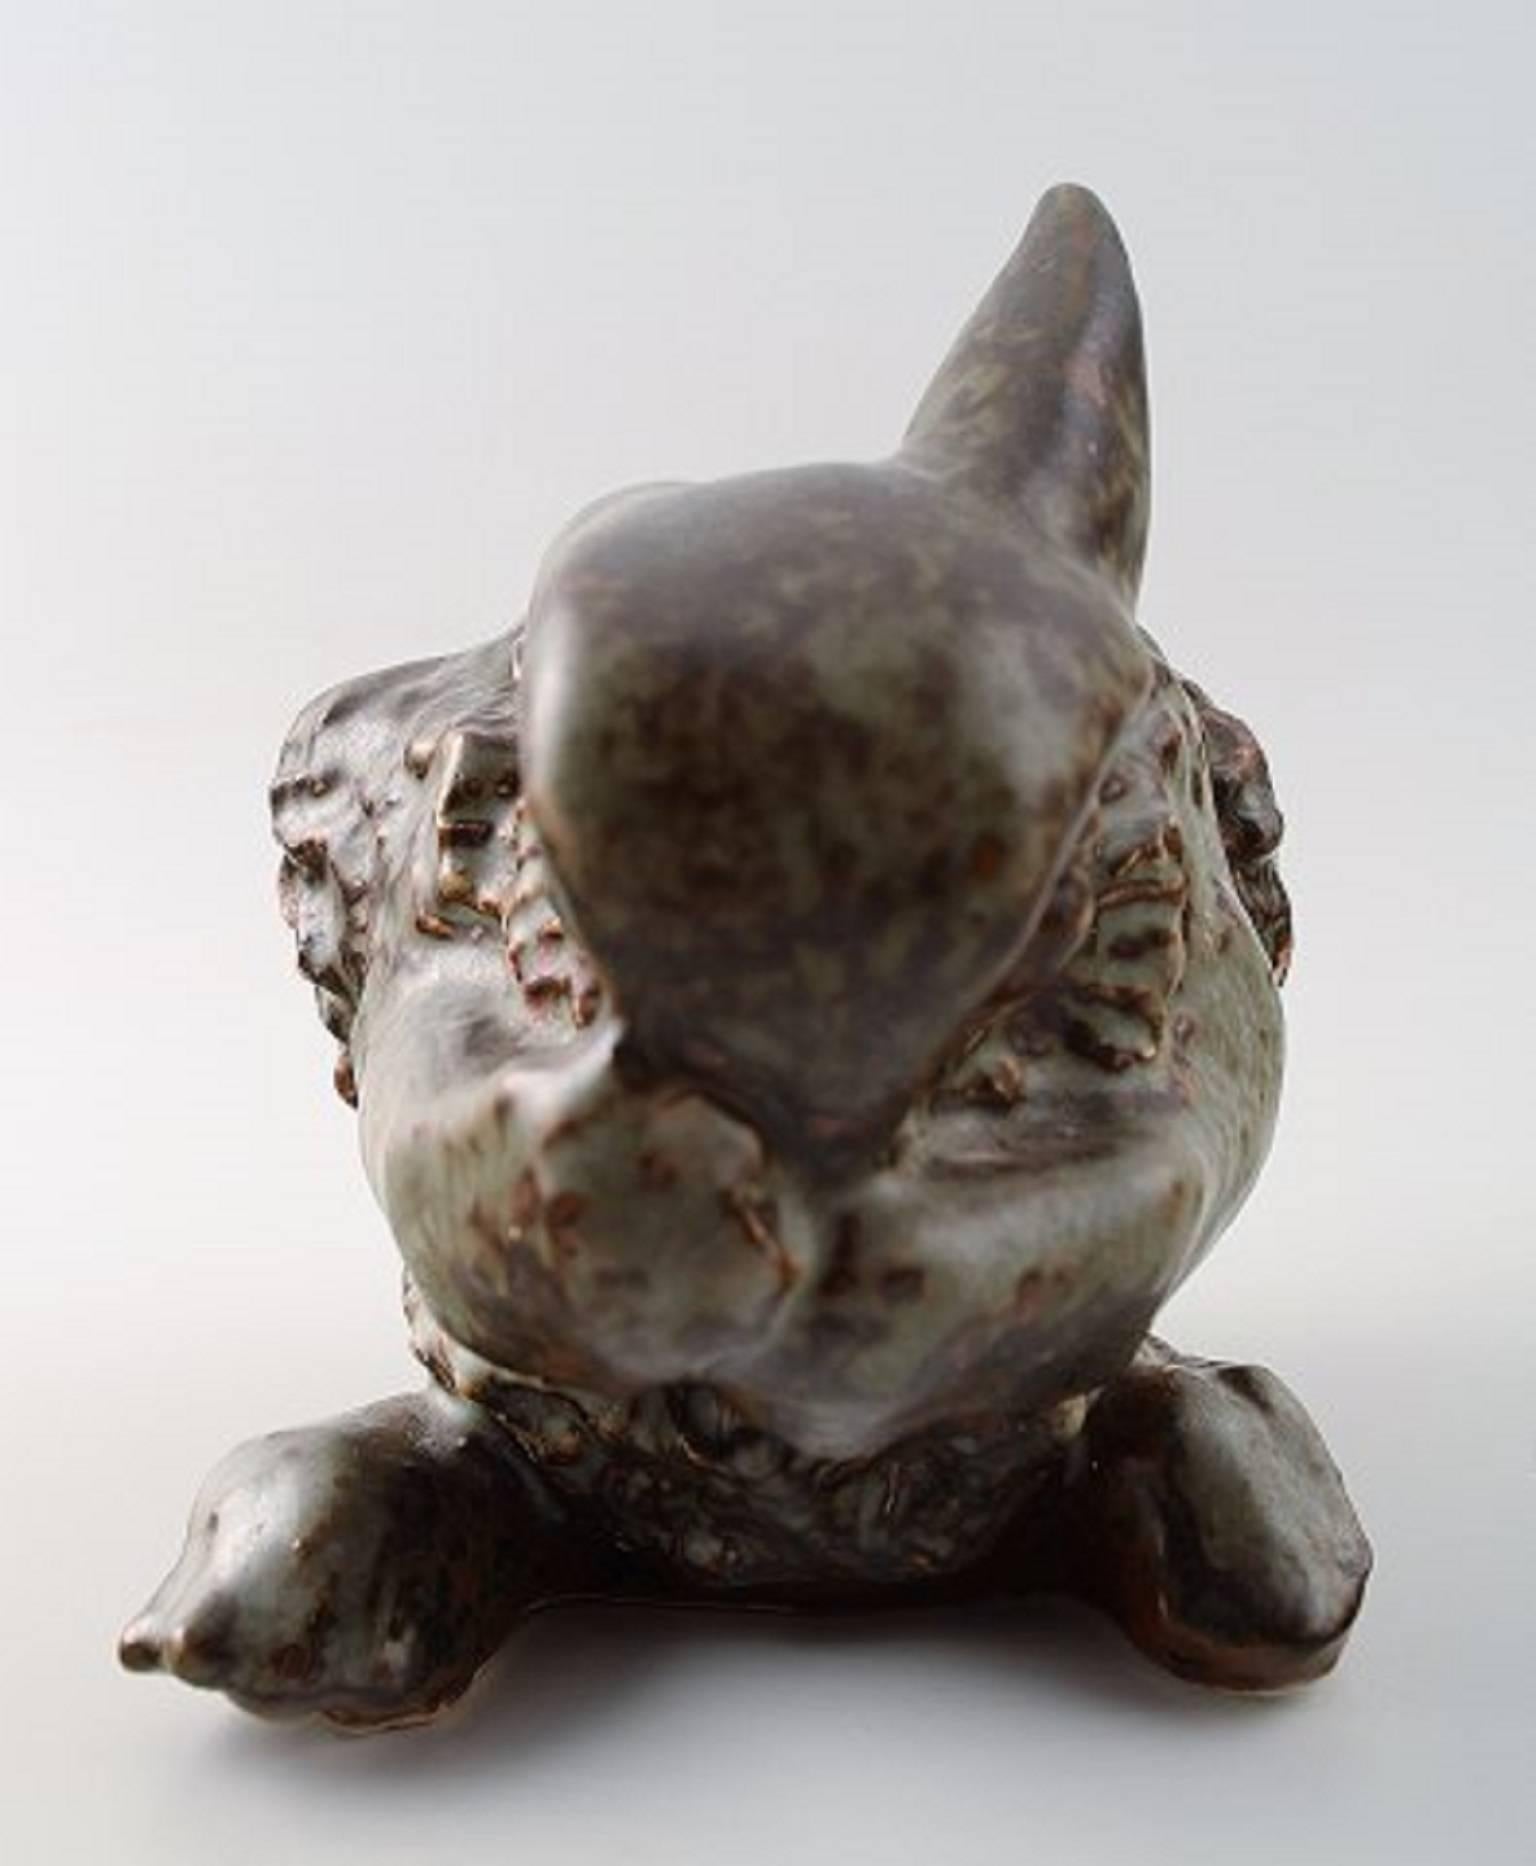 Saxbo rabbit in stoneware by Hugo Liisberg.
Perfect condition.
Measures: 12.5 x 15cm.
Hallmarked.